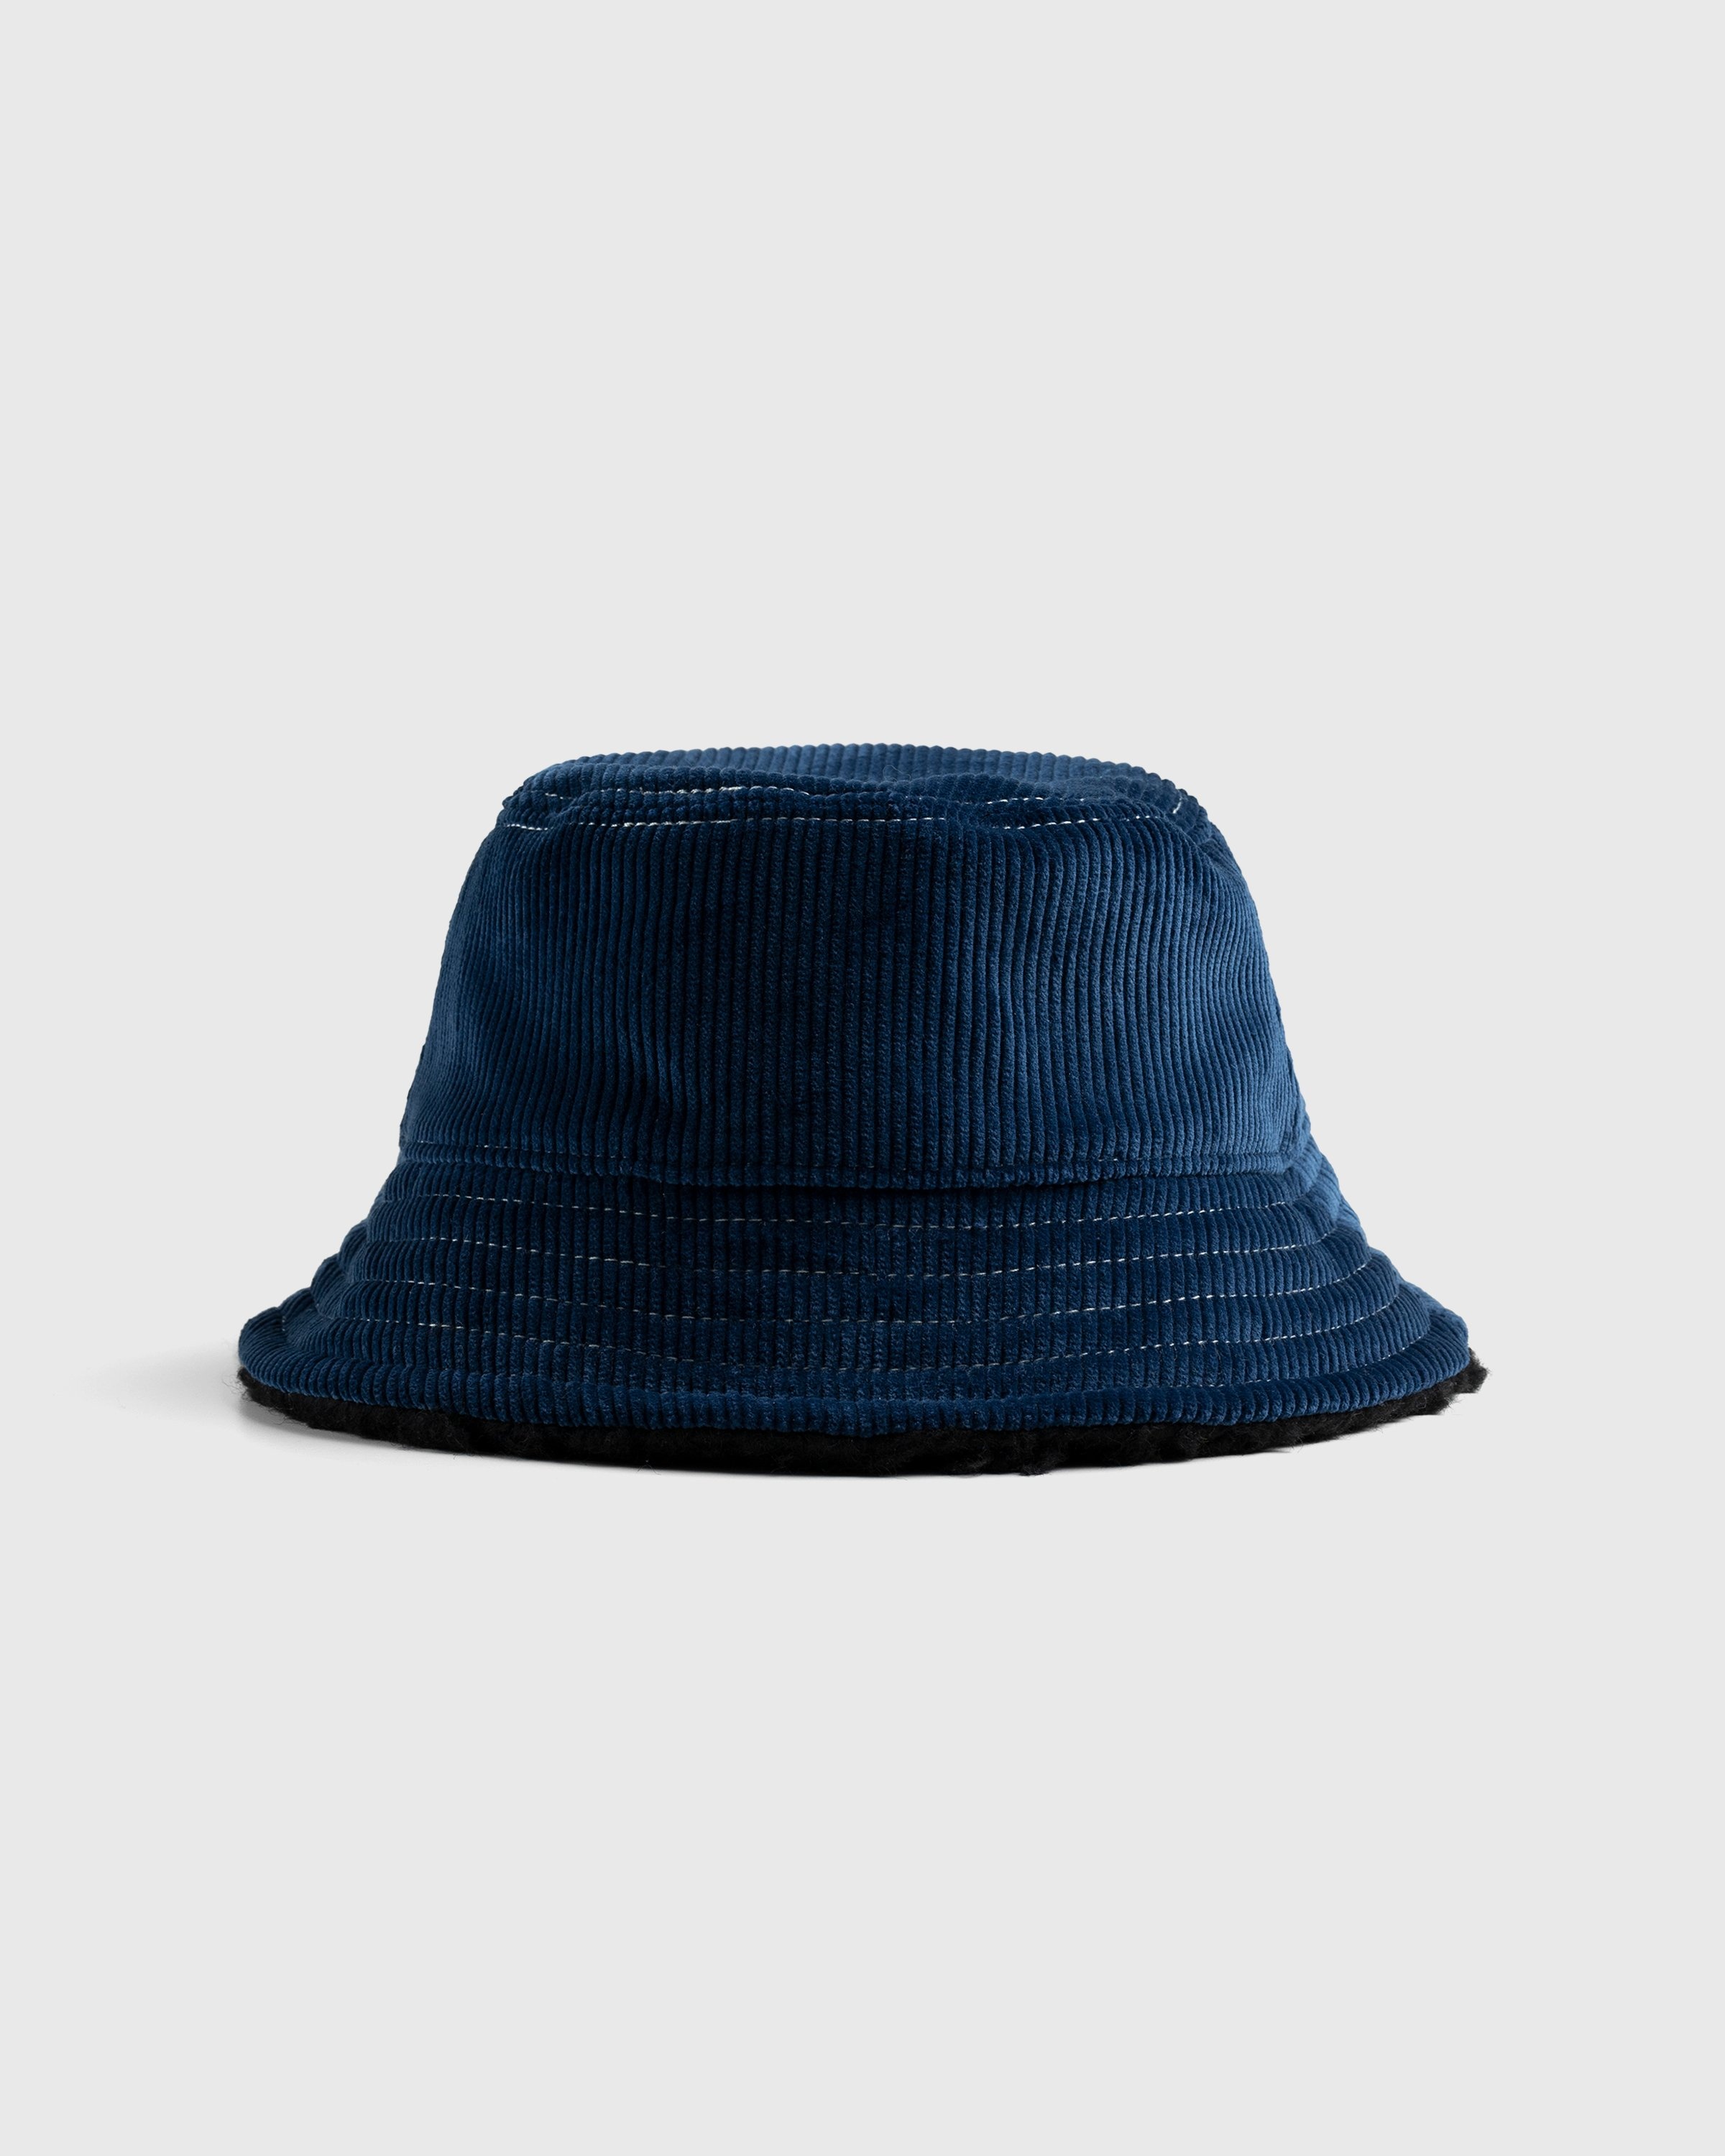 Marni – Bucket Hat Blue | Highsnobiety Shop